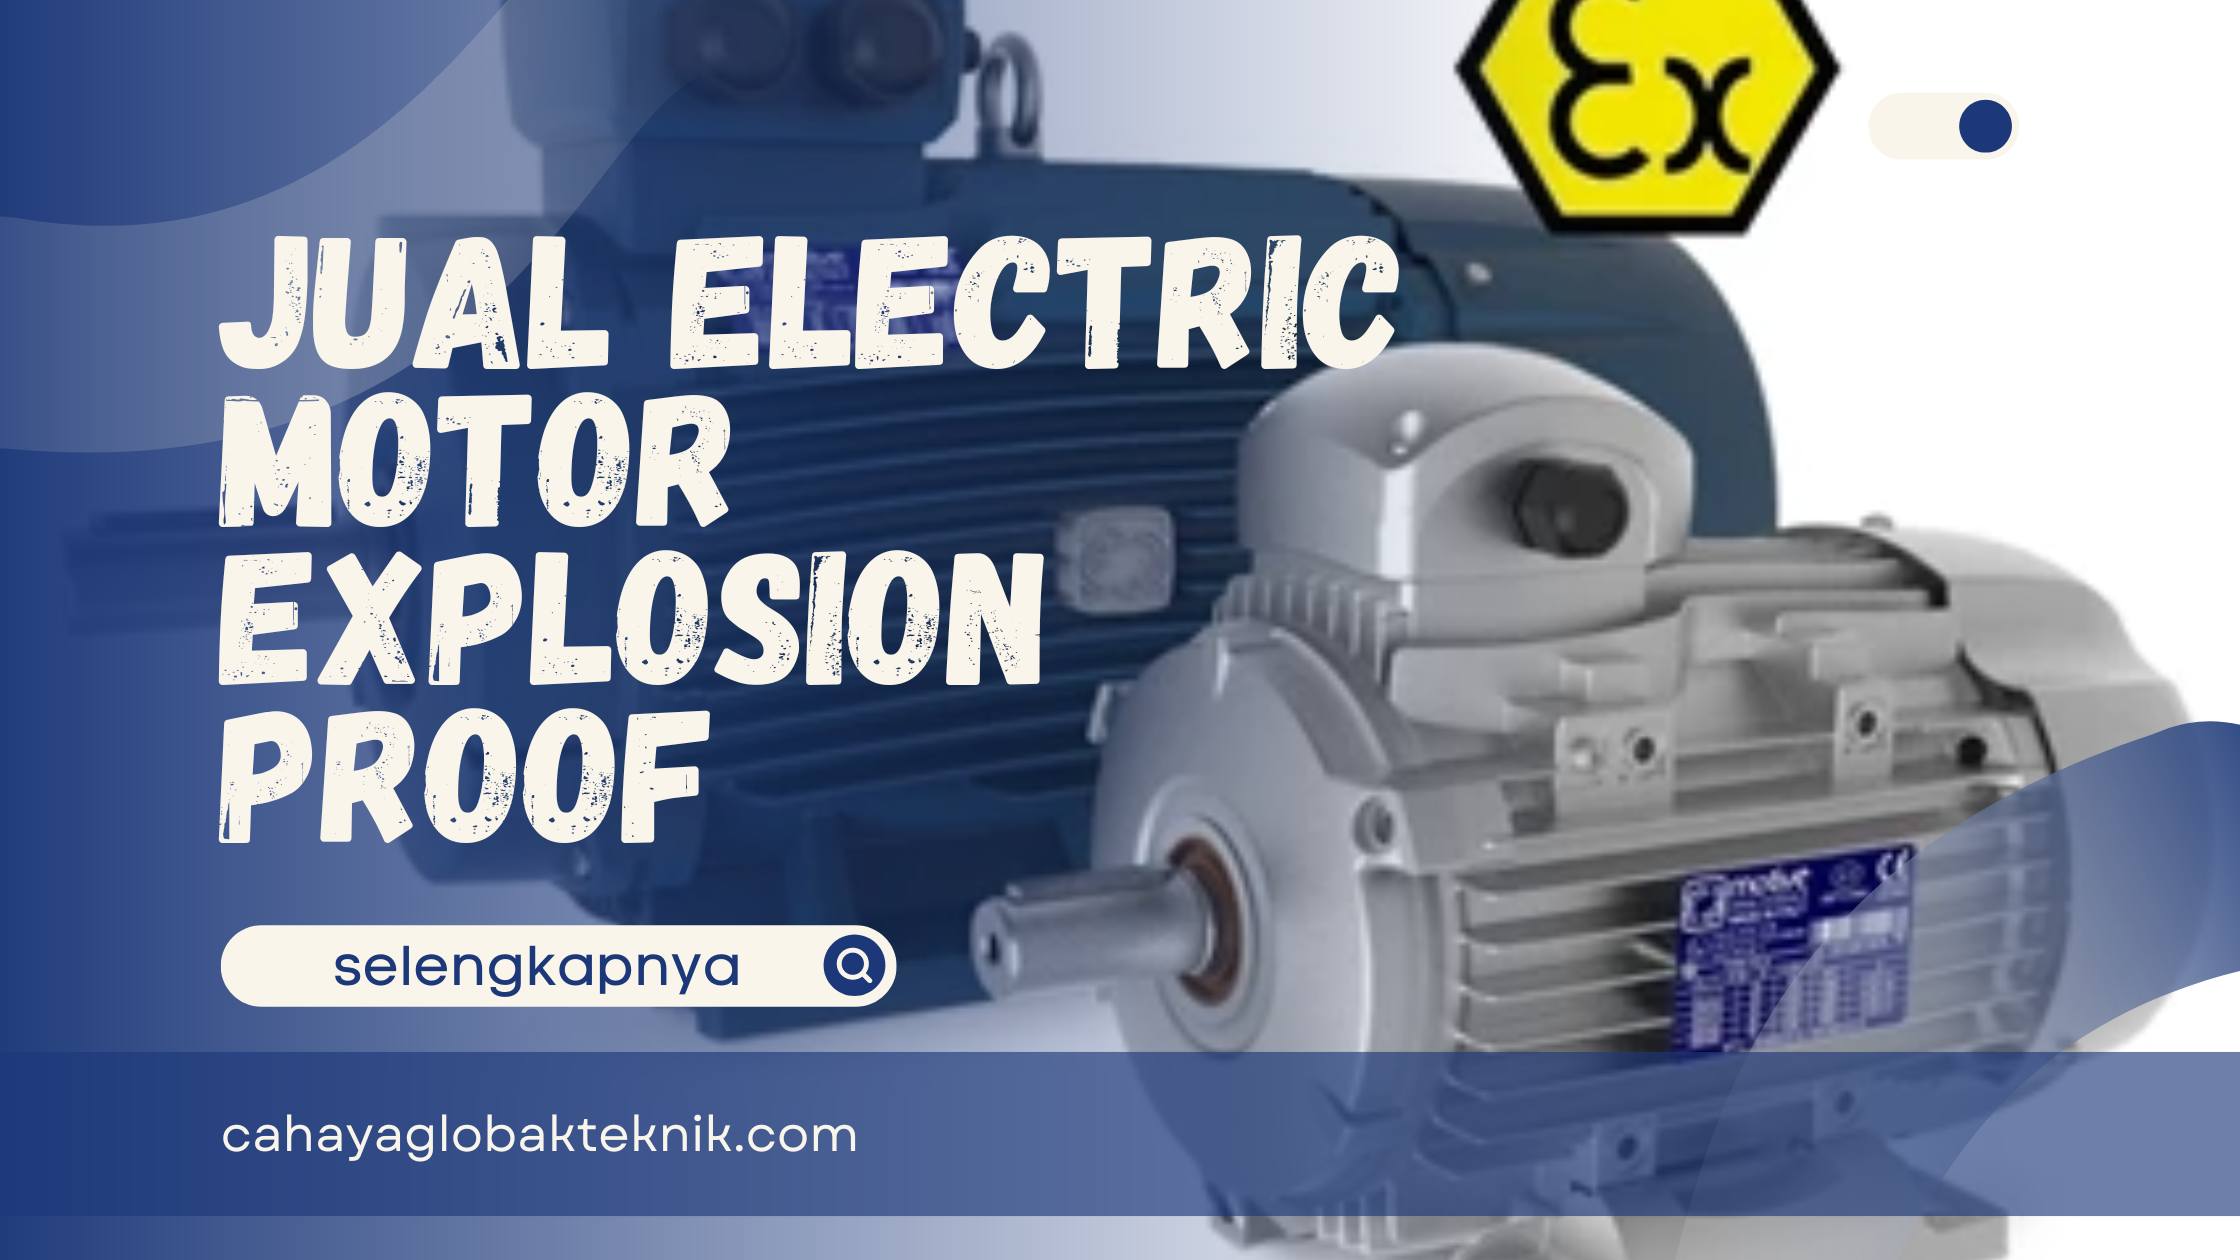 Jual Electric Motor Explosion Proof